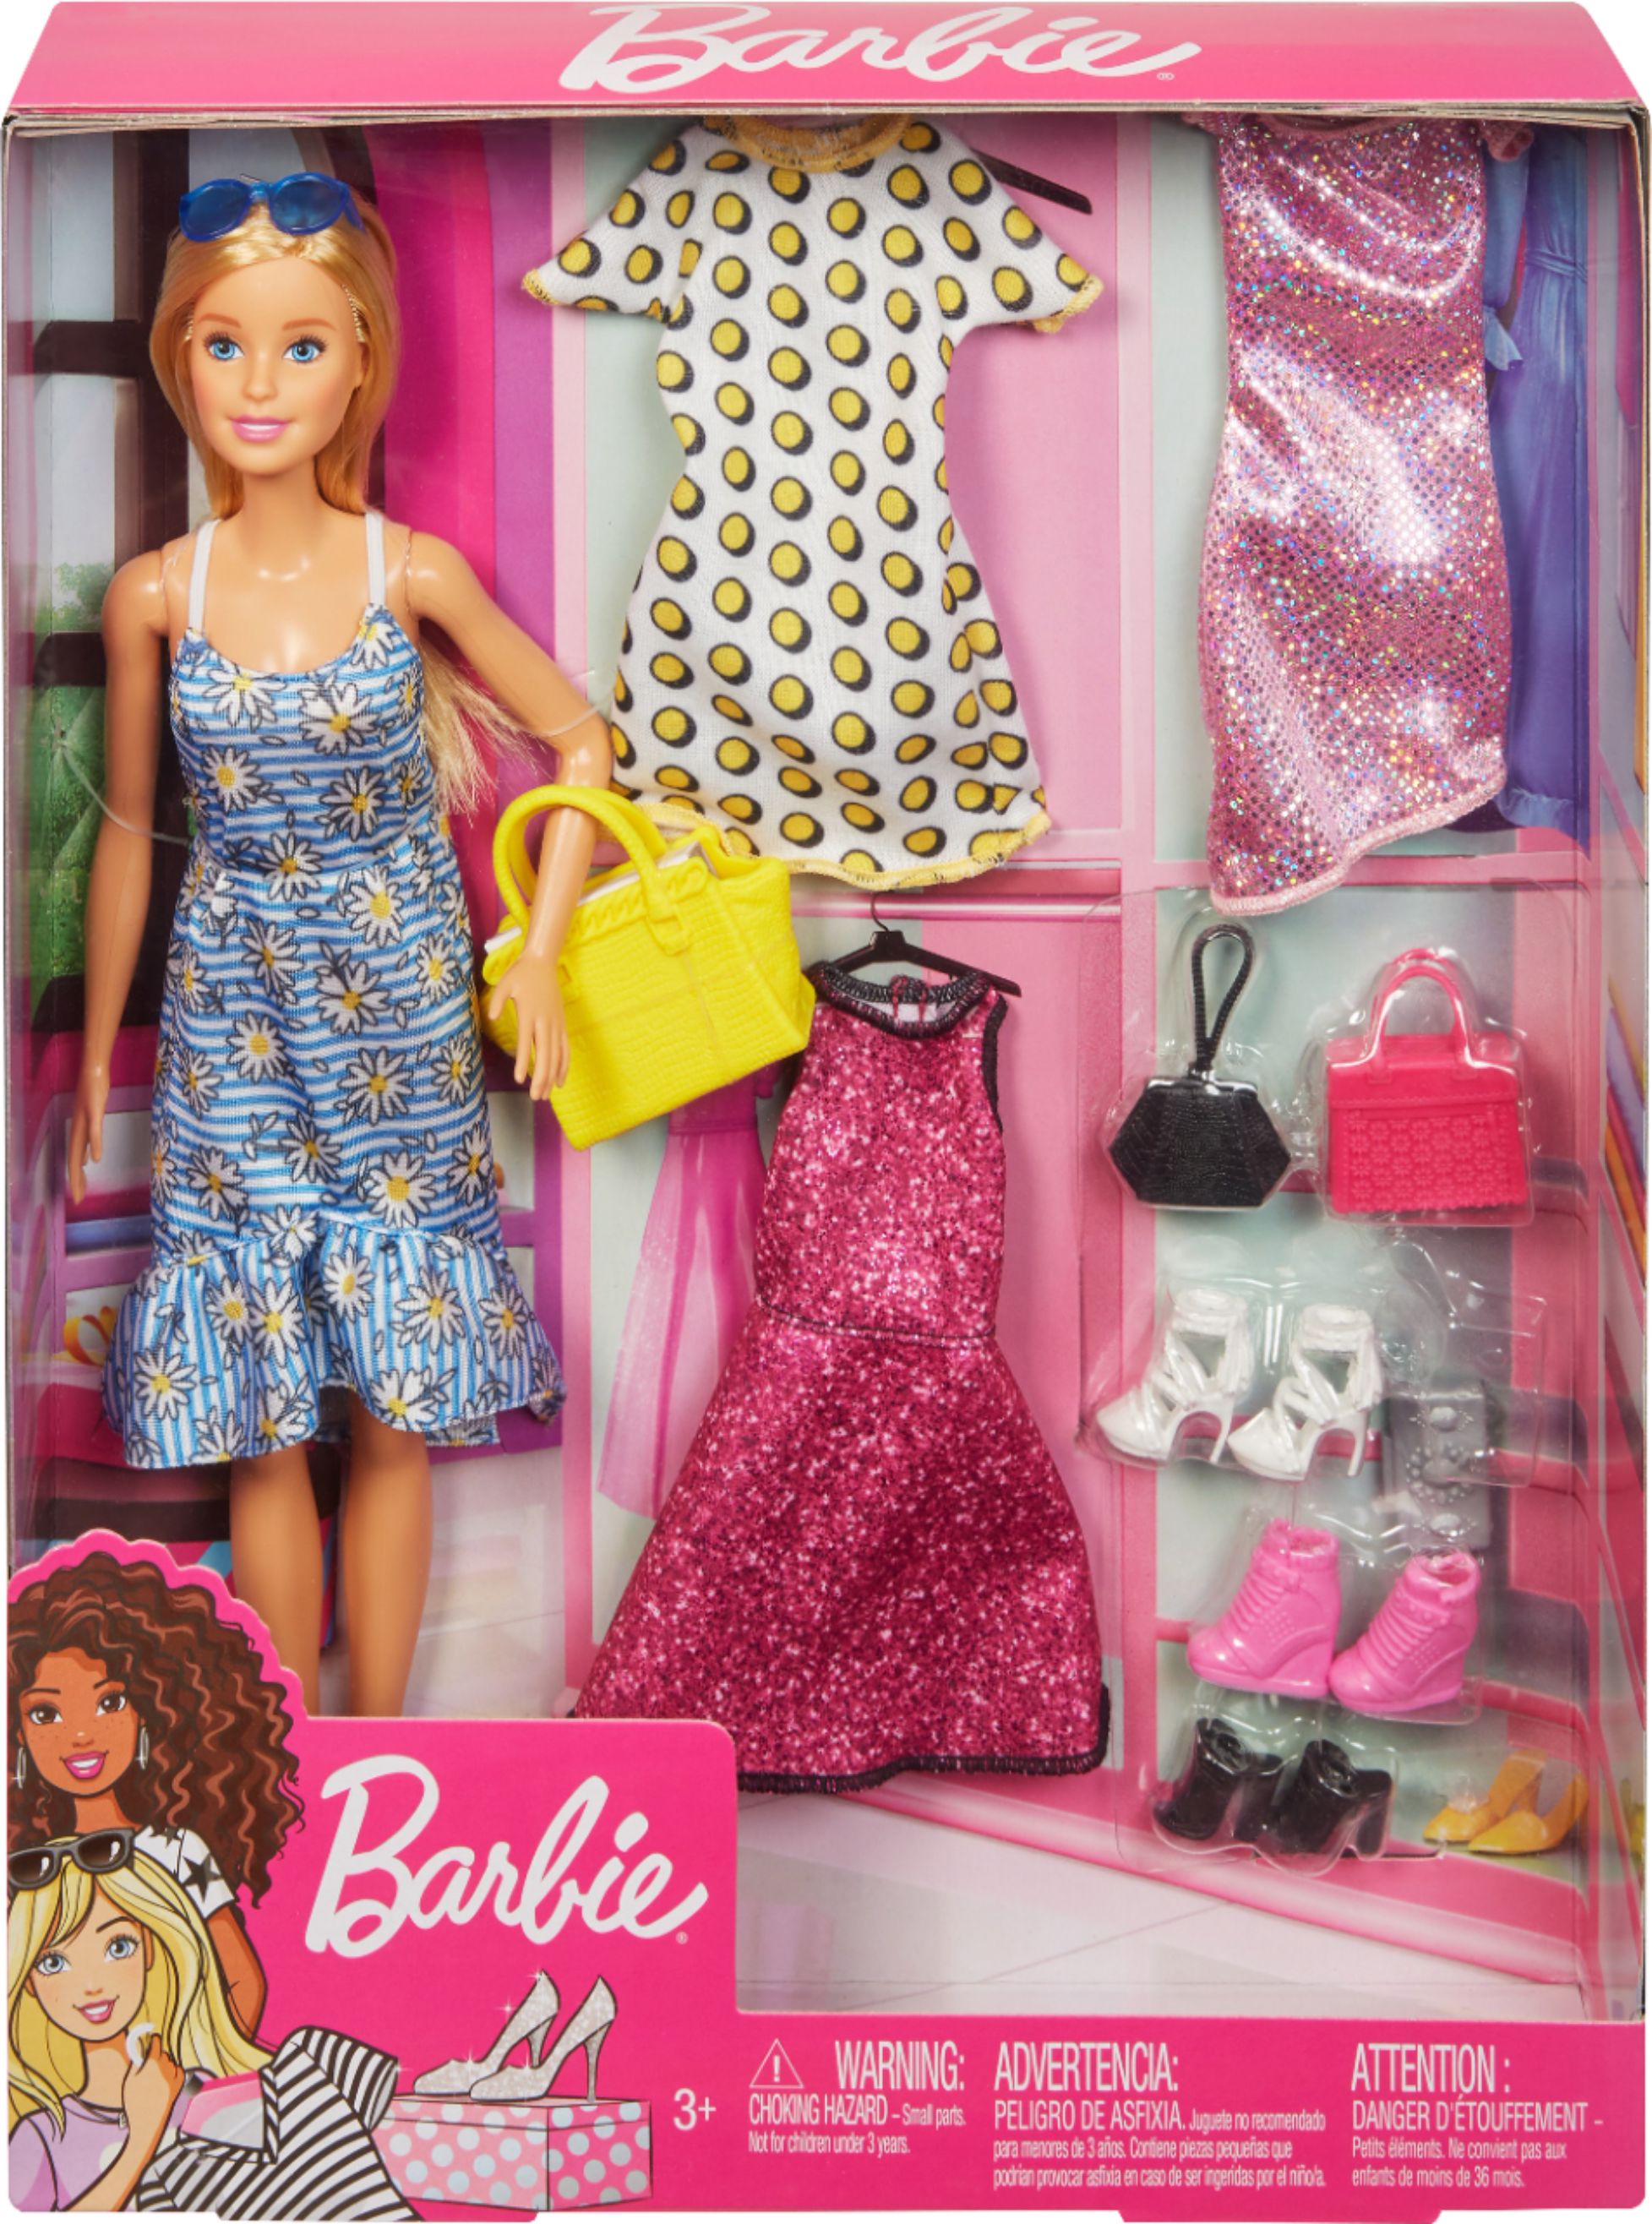 Set 2-6 Pattern Set Wardrobe for My Size Barbie Dolls 